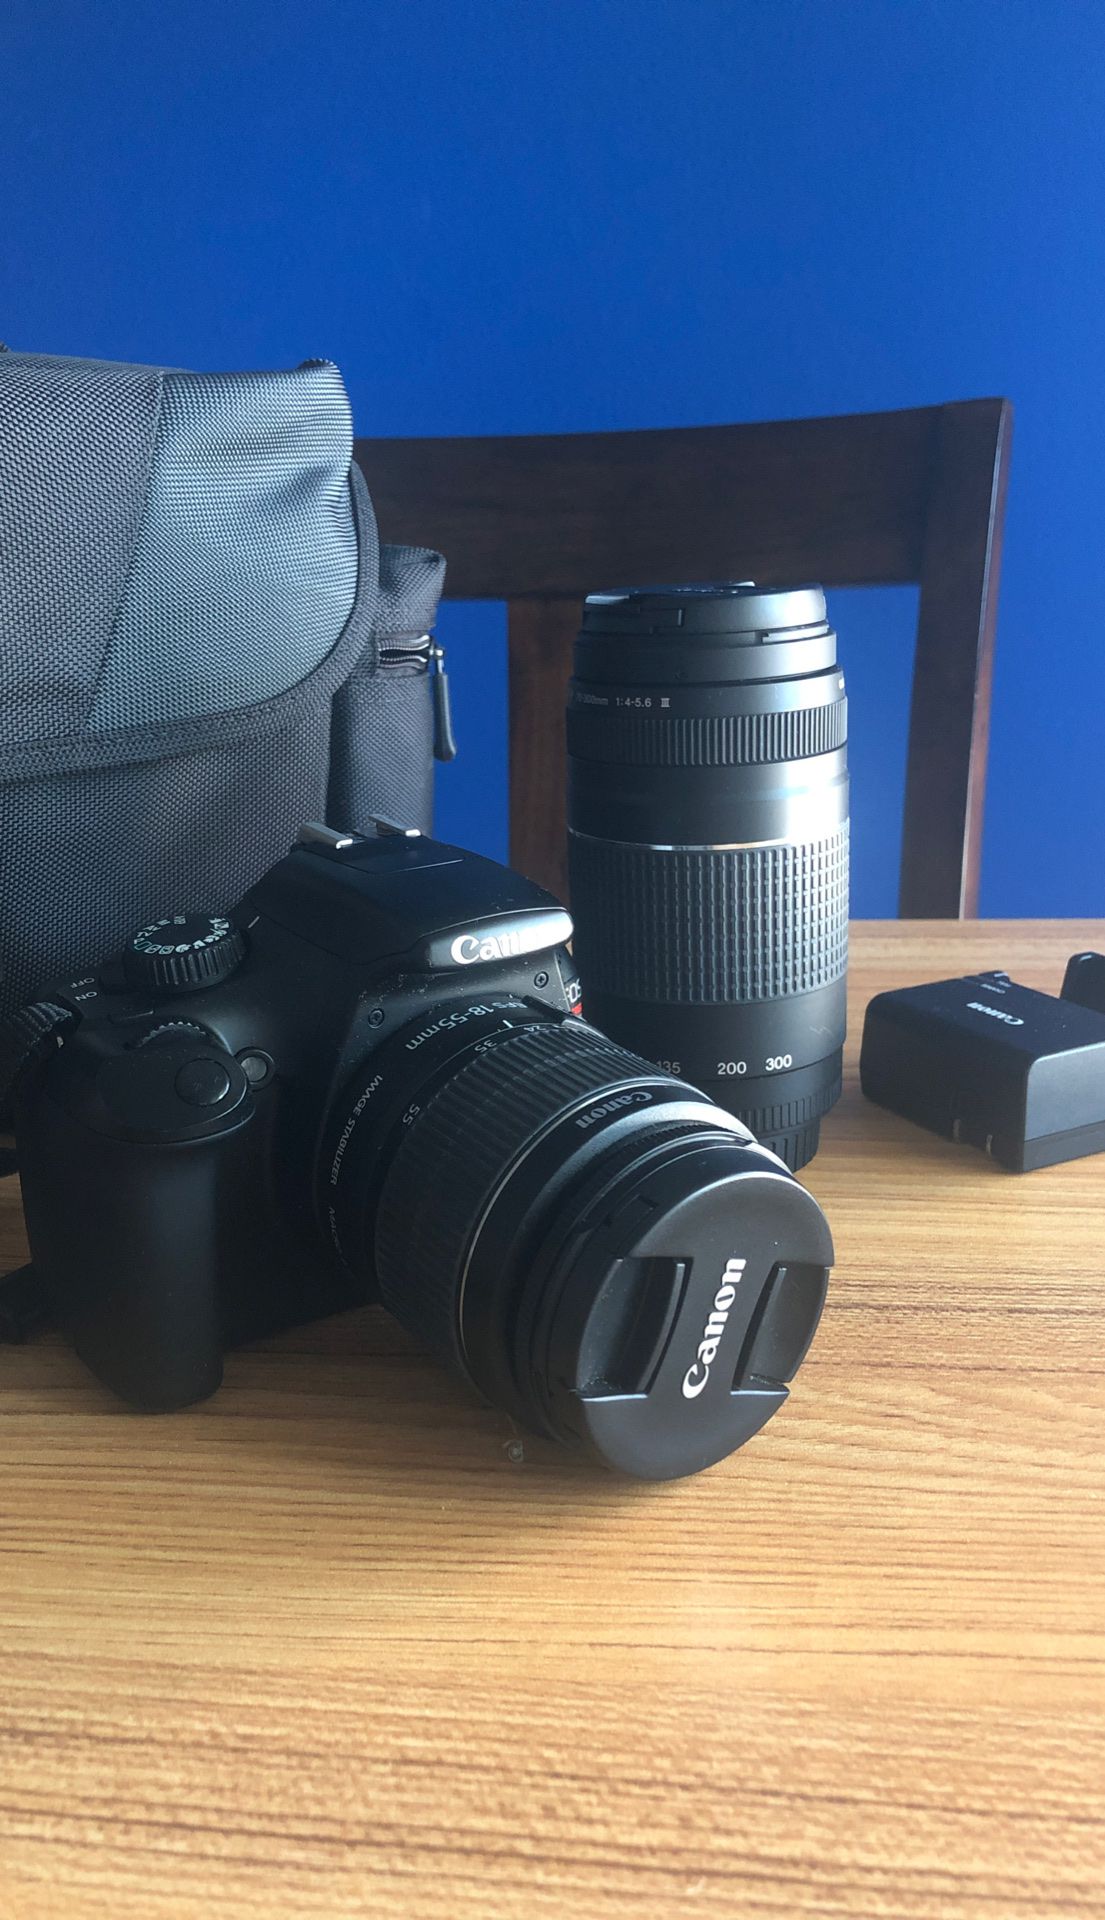 Canon EOS Rebel T3 Digital SLR Camera with EFS 18-55mm - Black